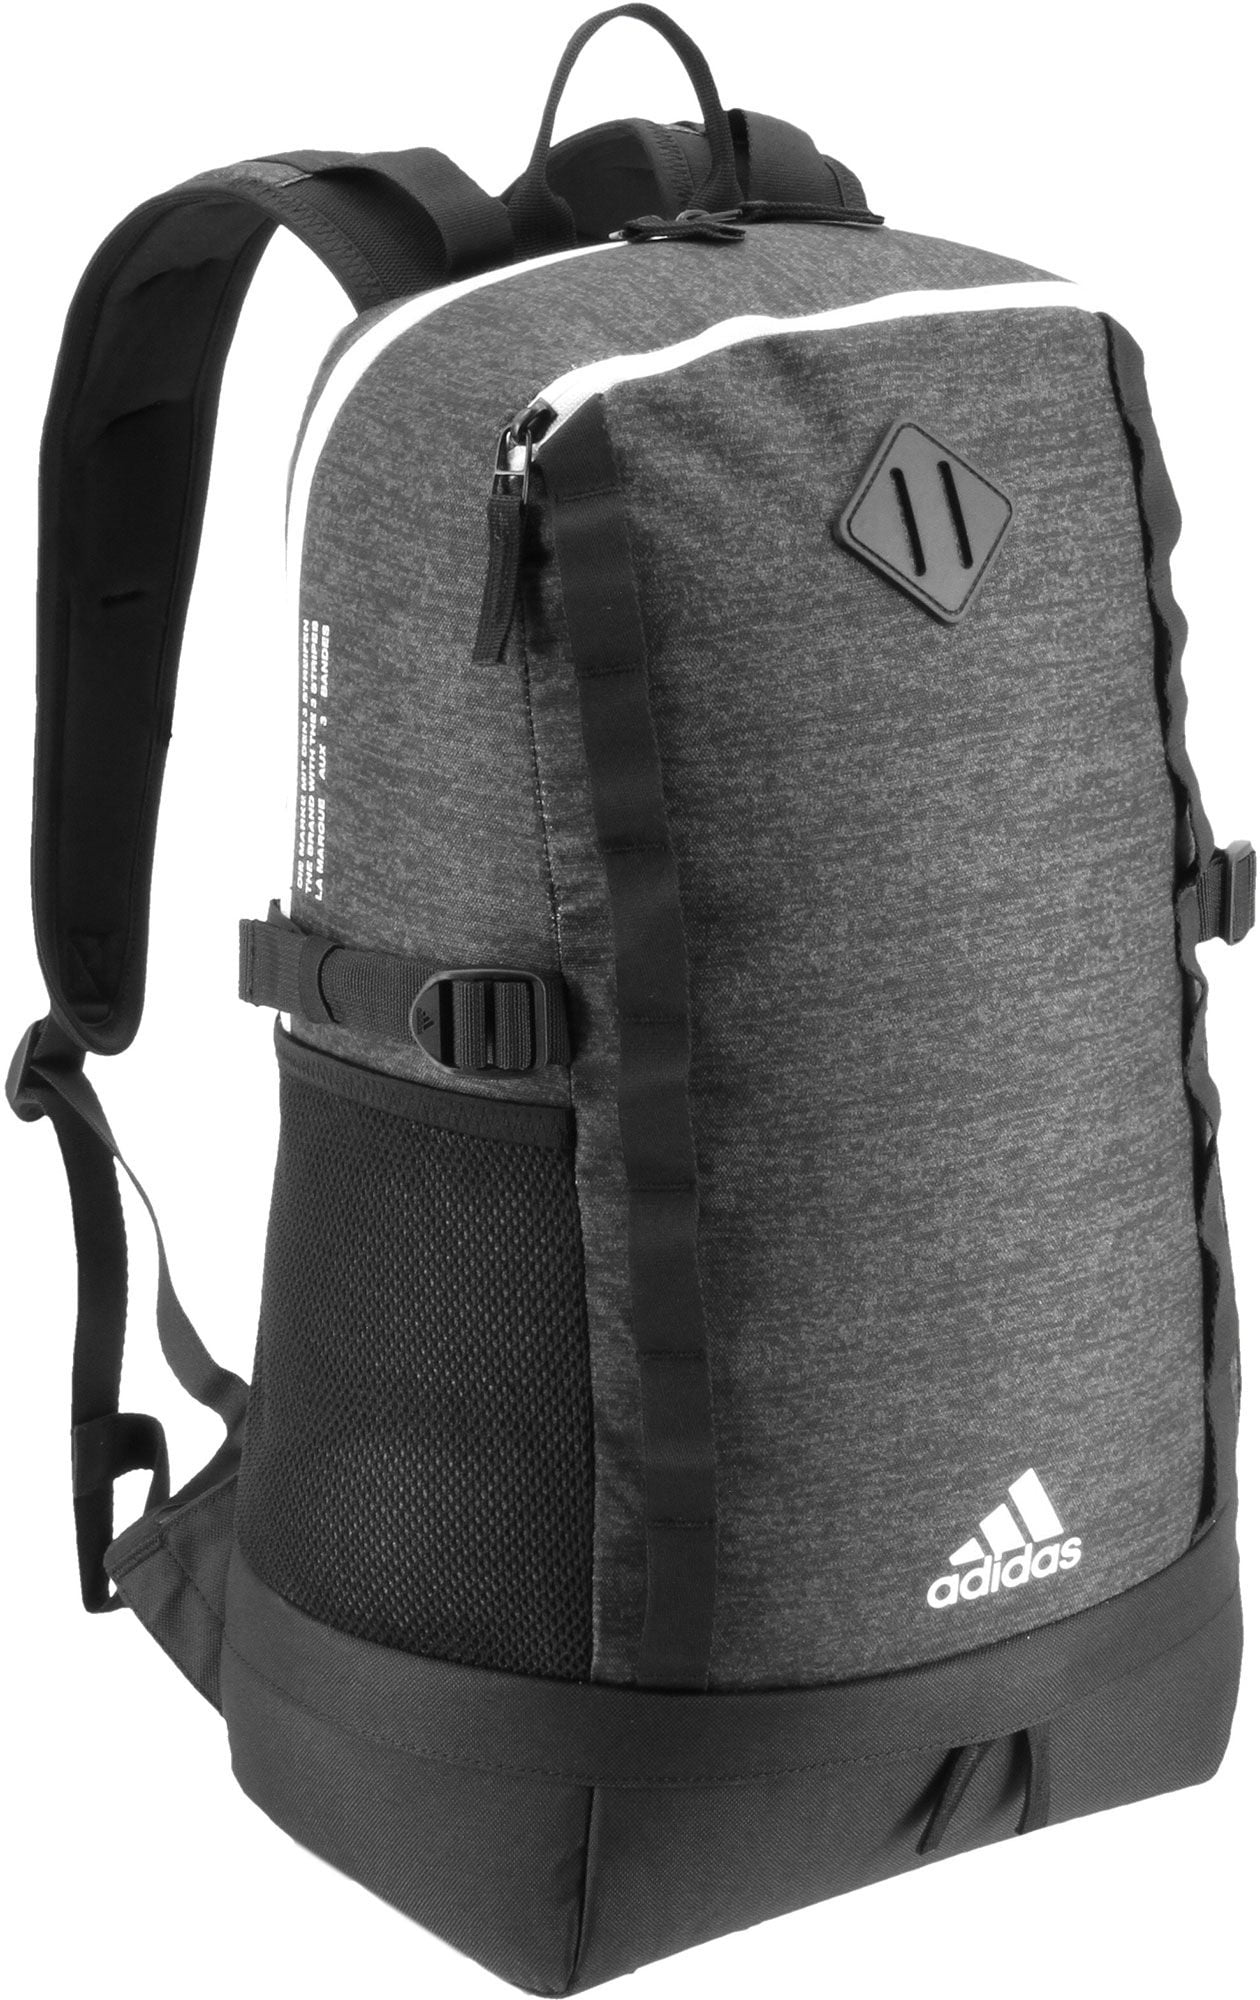 adidas franchise ii backpack